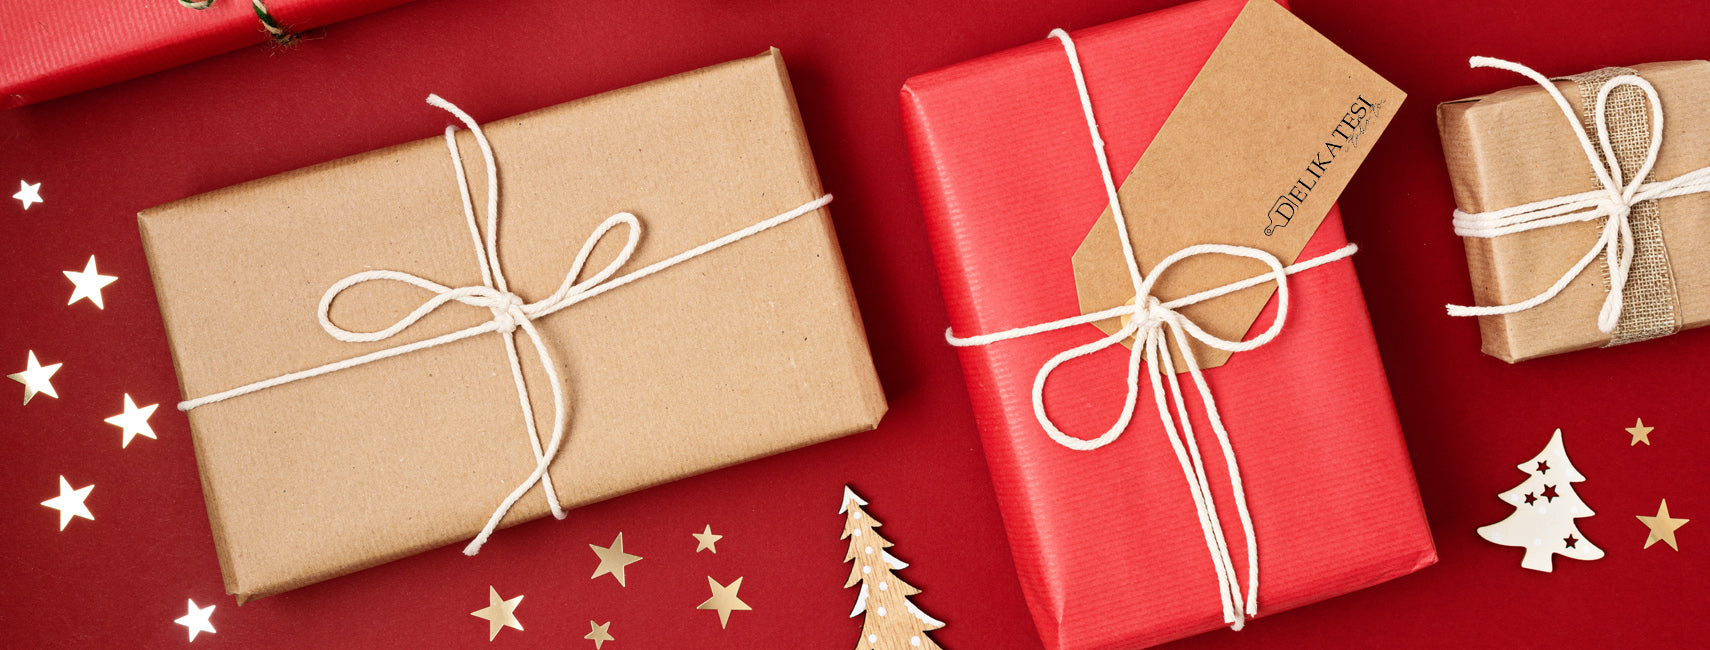 Počinje sezona darivanja – 7 ideja za praznične poklone